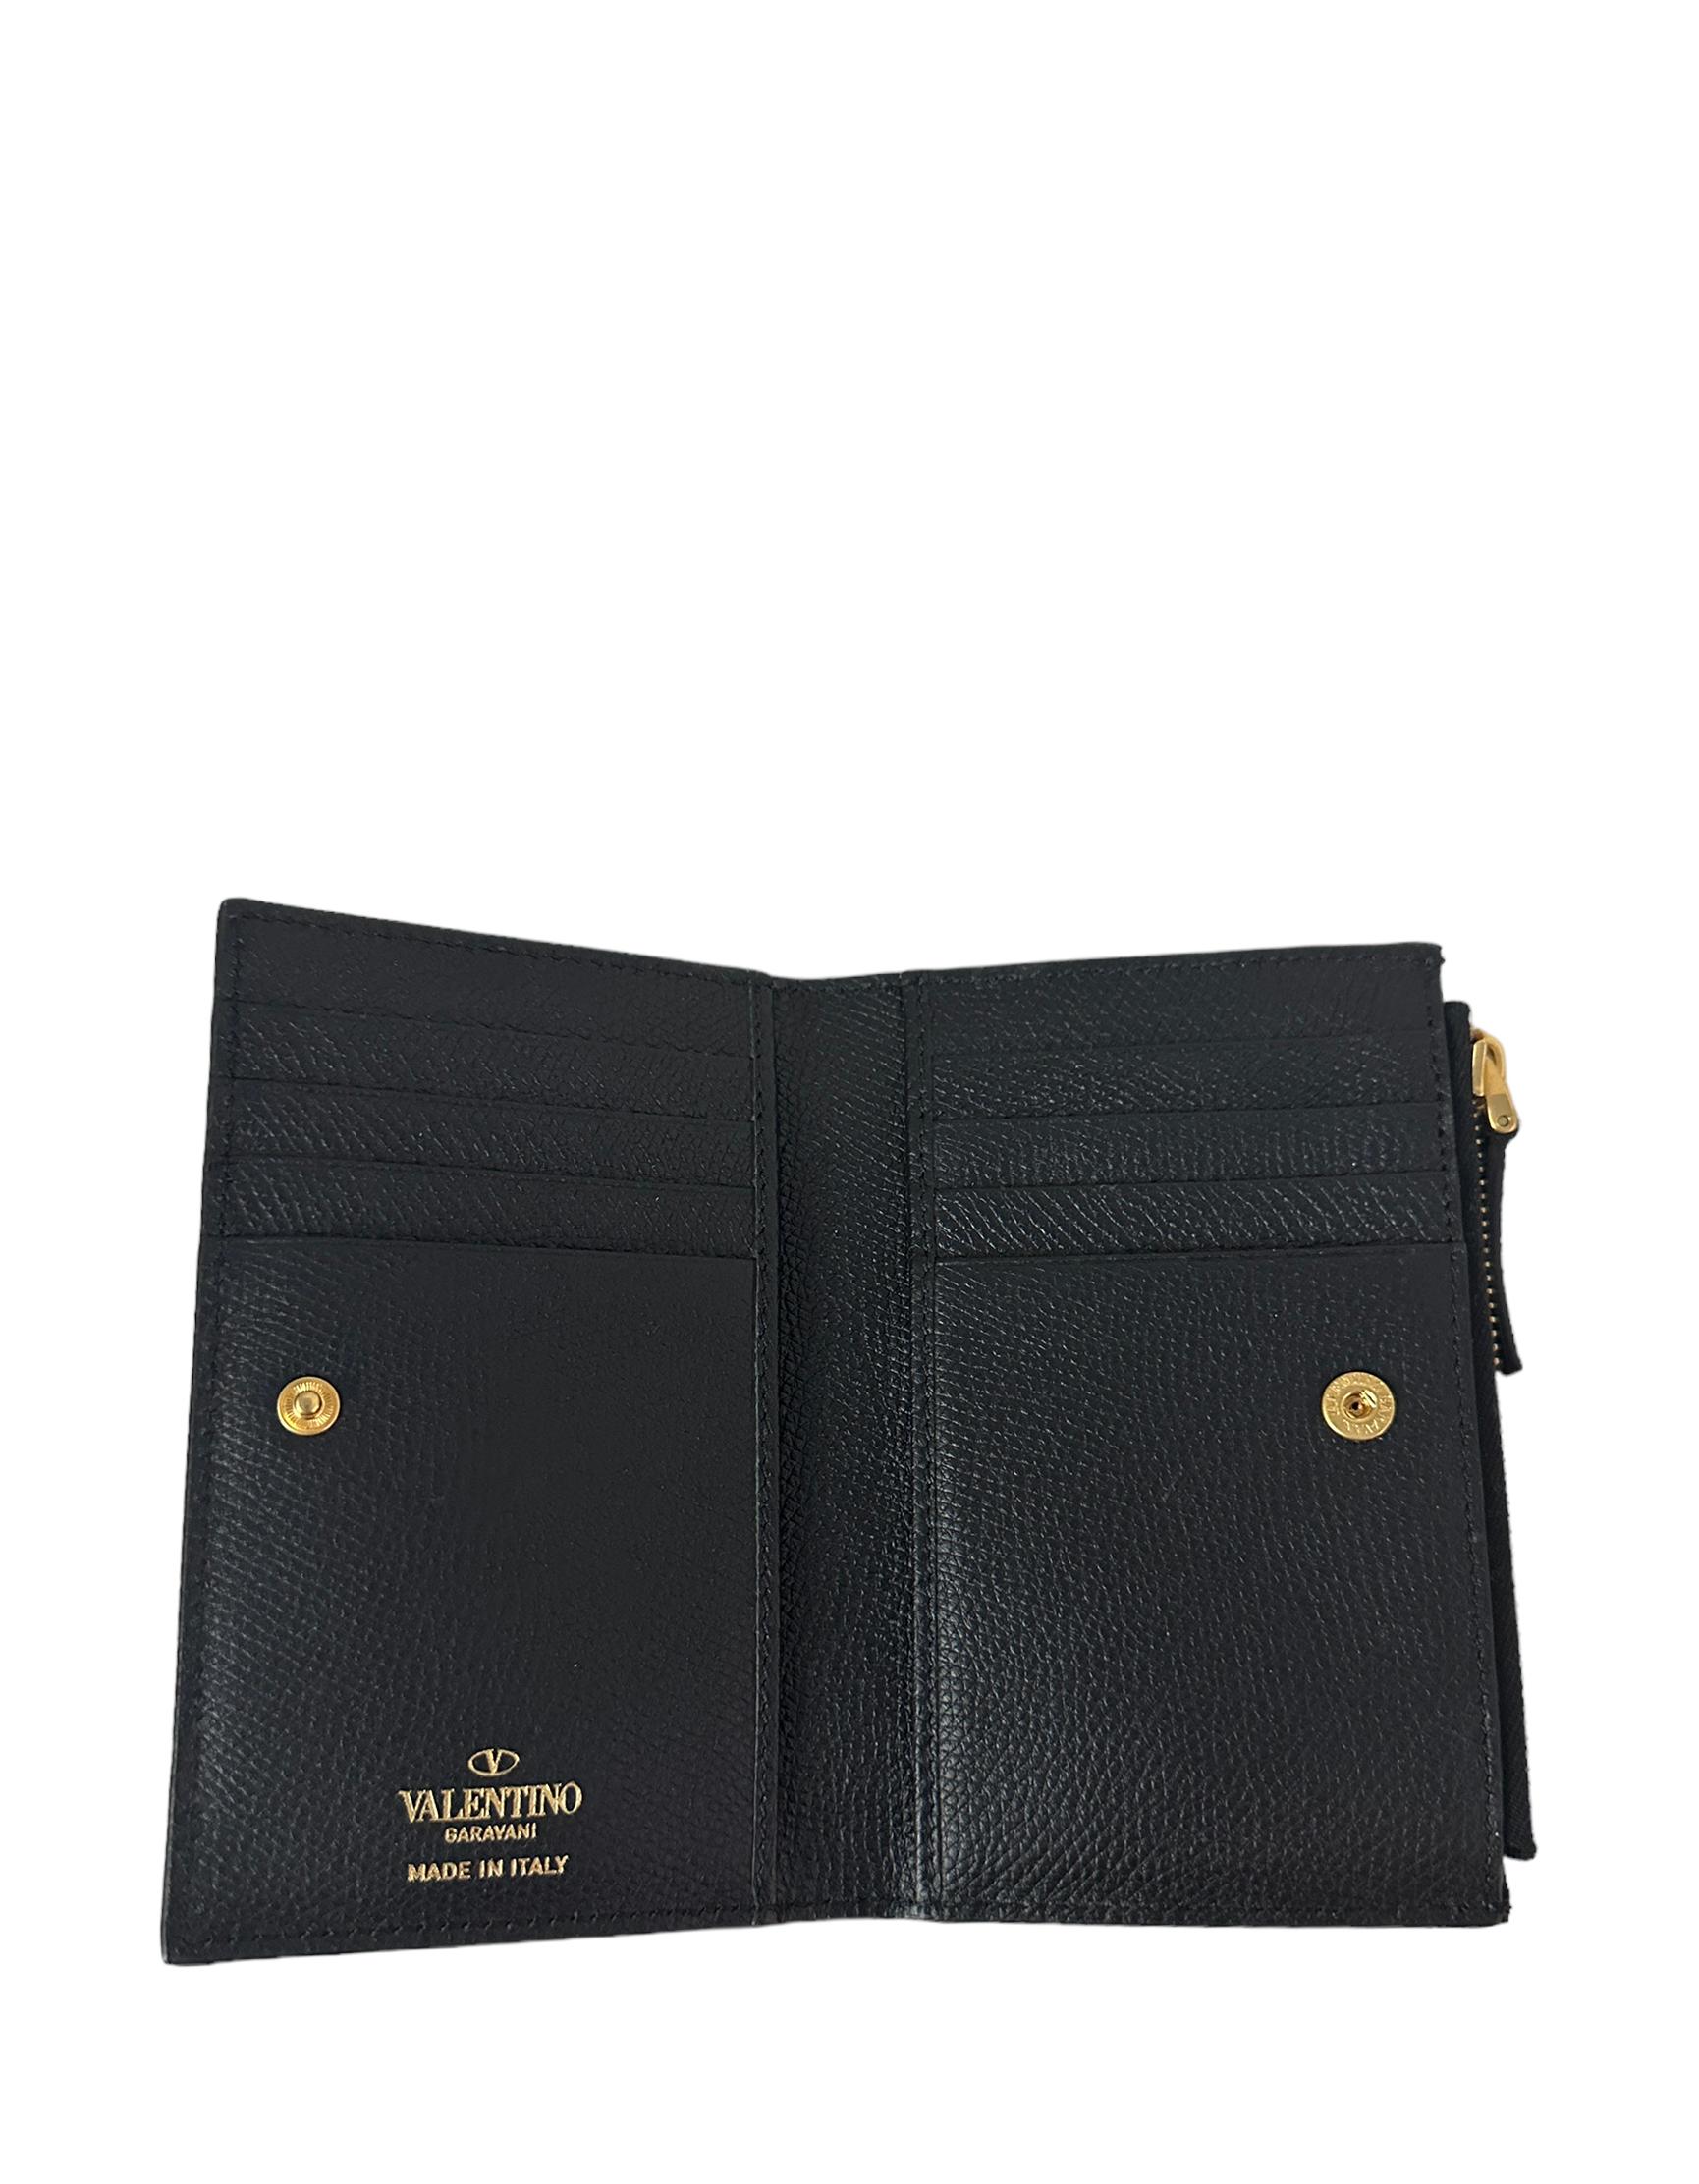 Valentino NEW Vlogo Black Signature Grainy Calfskin Cardholder Wallet 3